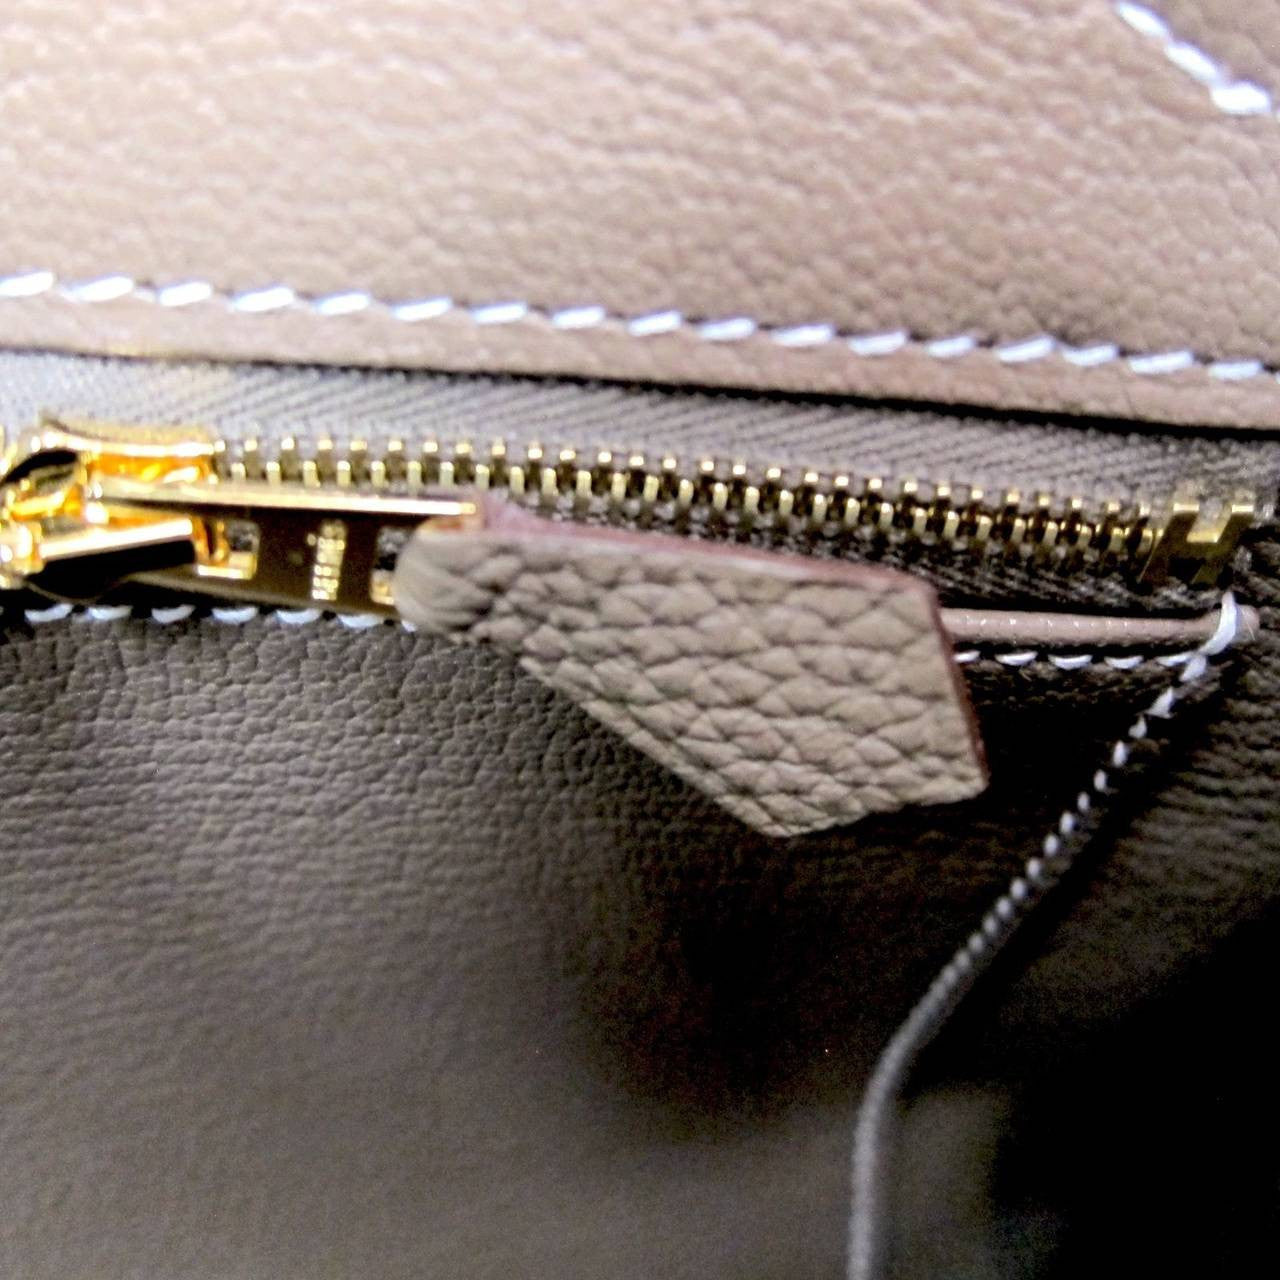 Hermès Birkin 30cm Veau Togo Etoupe 18 Gold Hardware